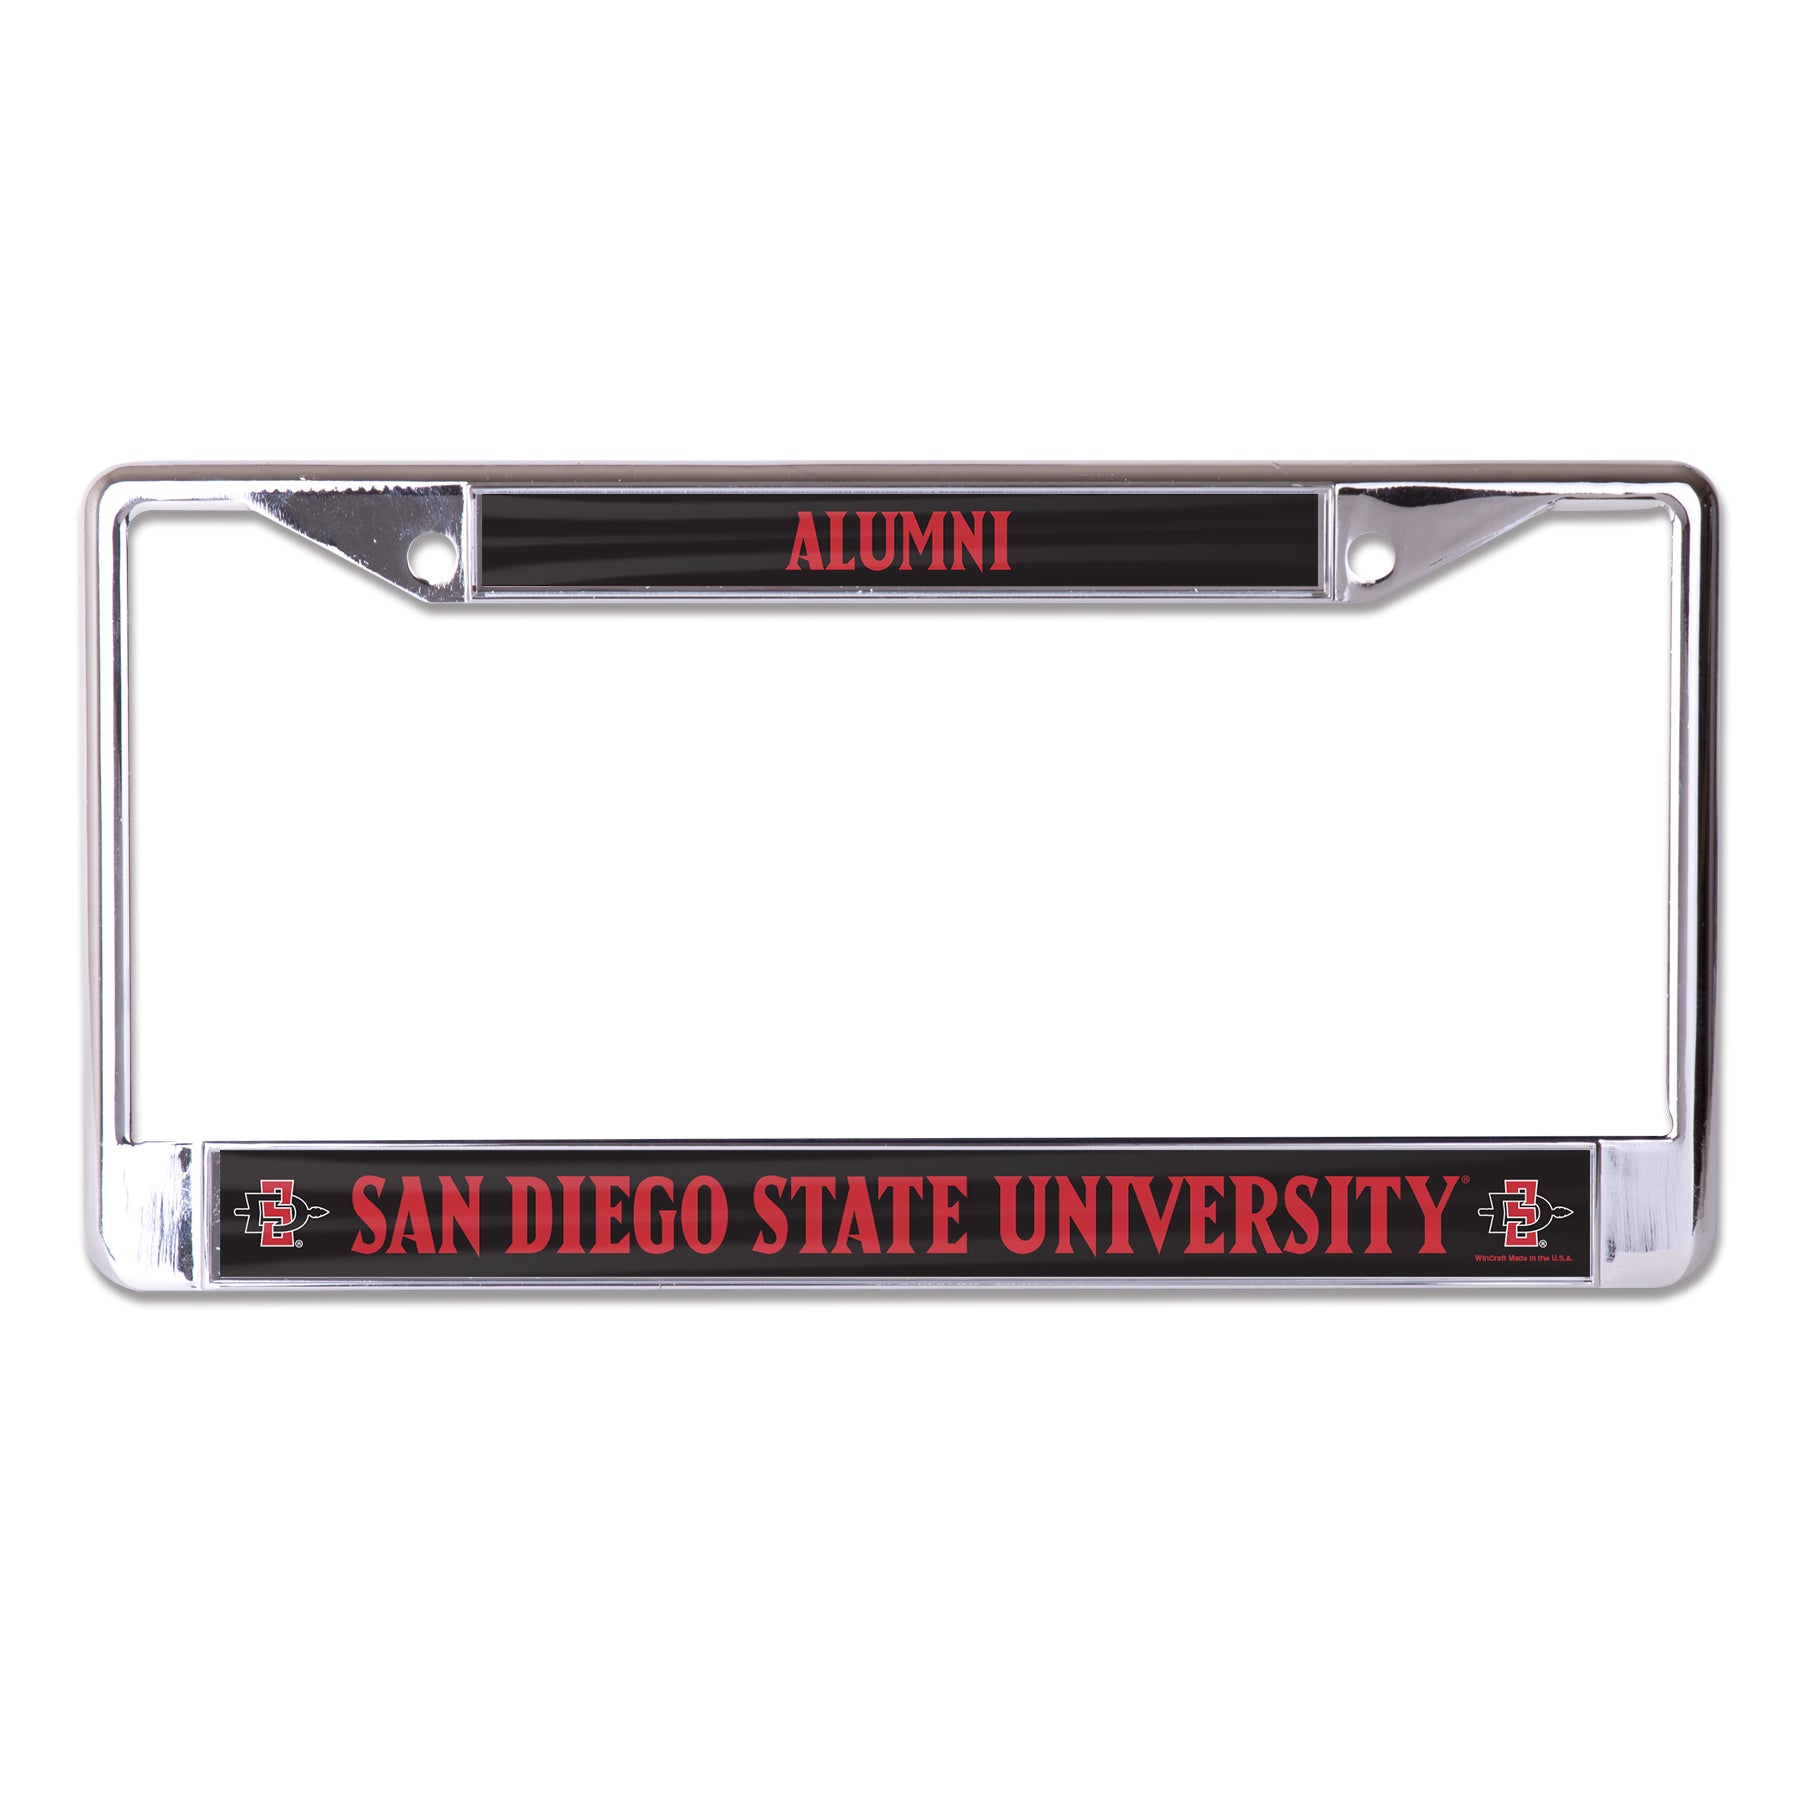 San Diego State University Alumni Chrome License Plate Frame